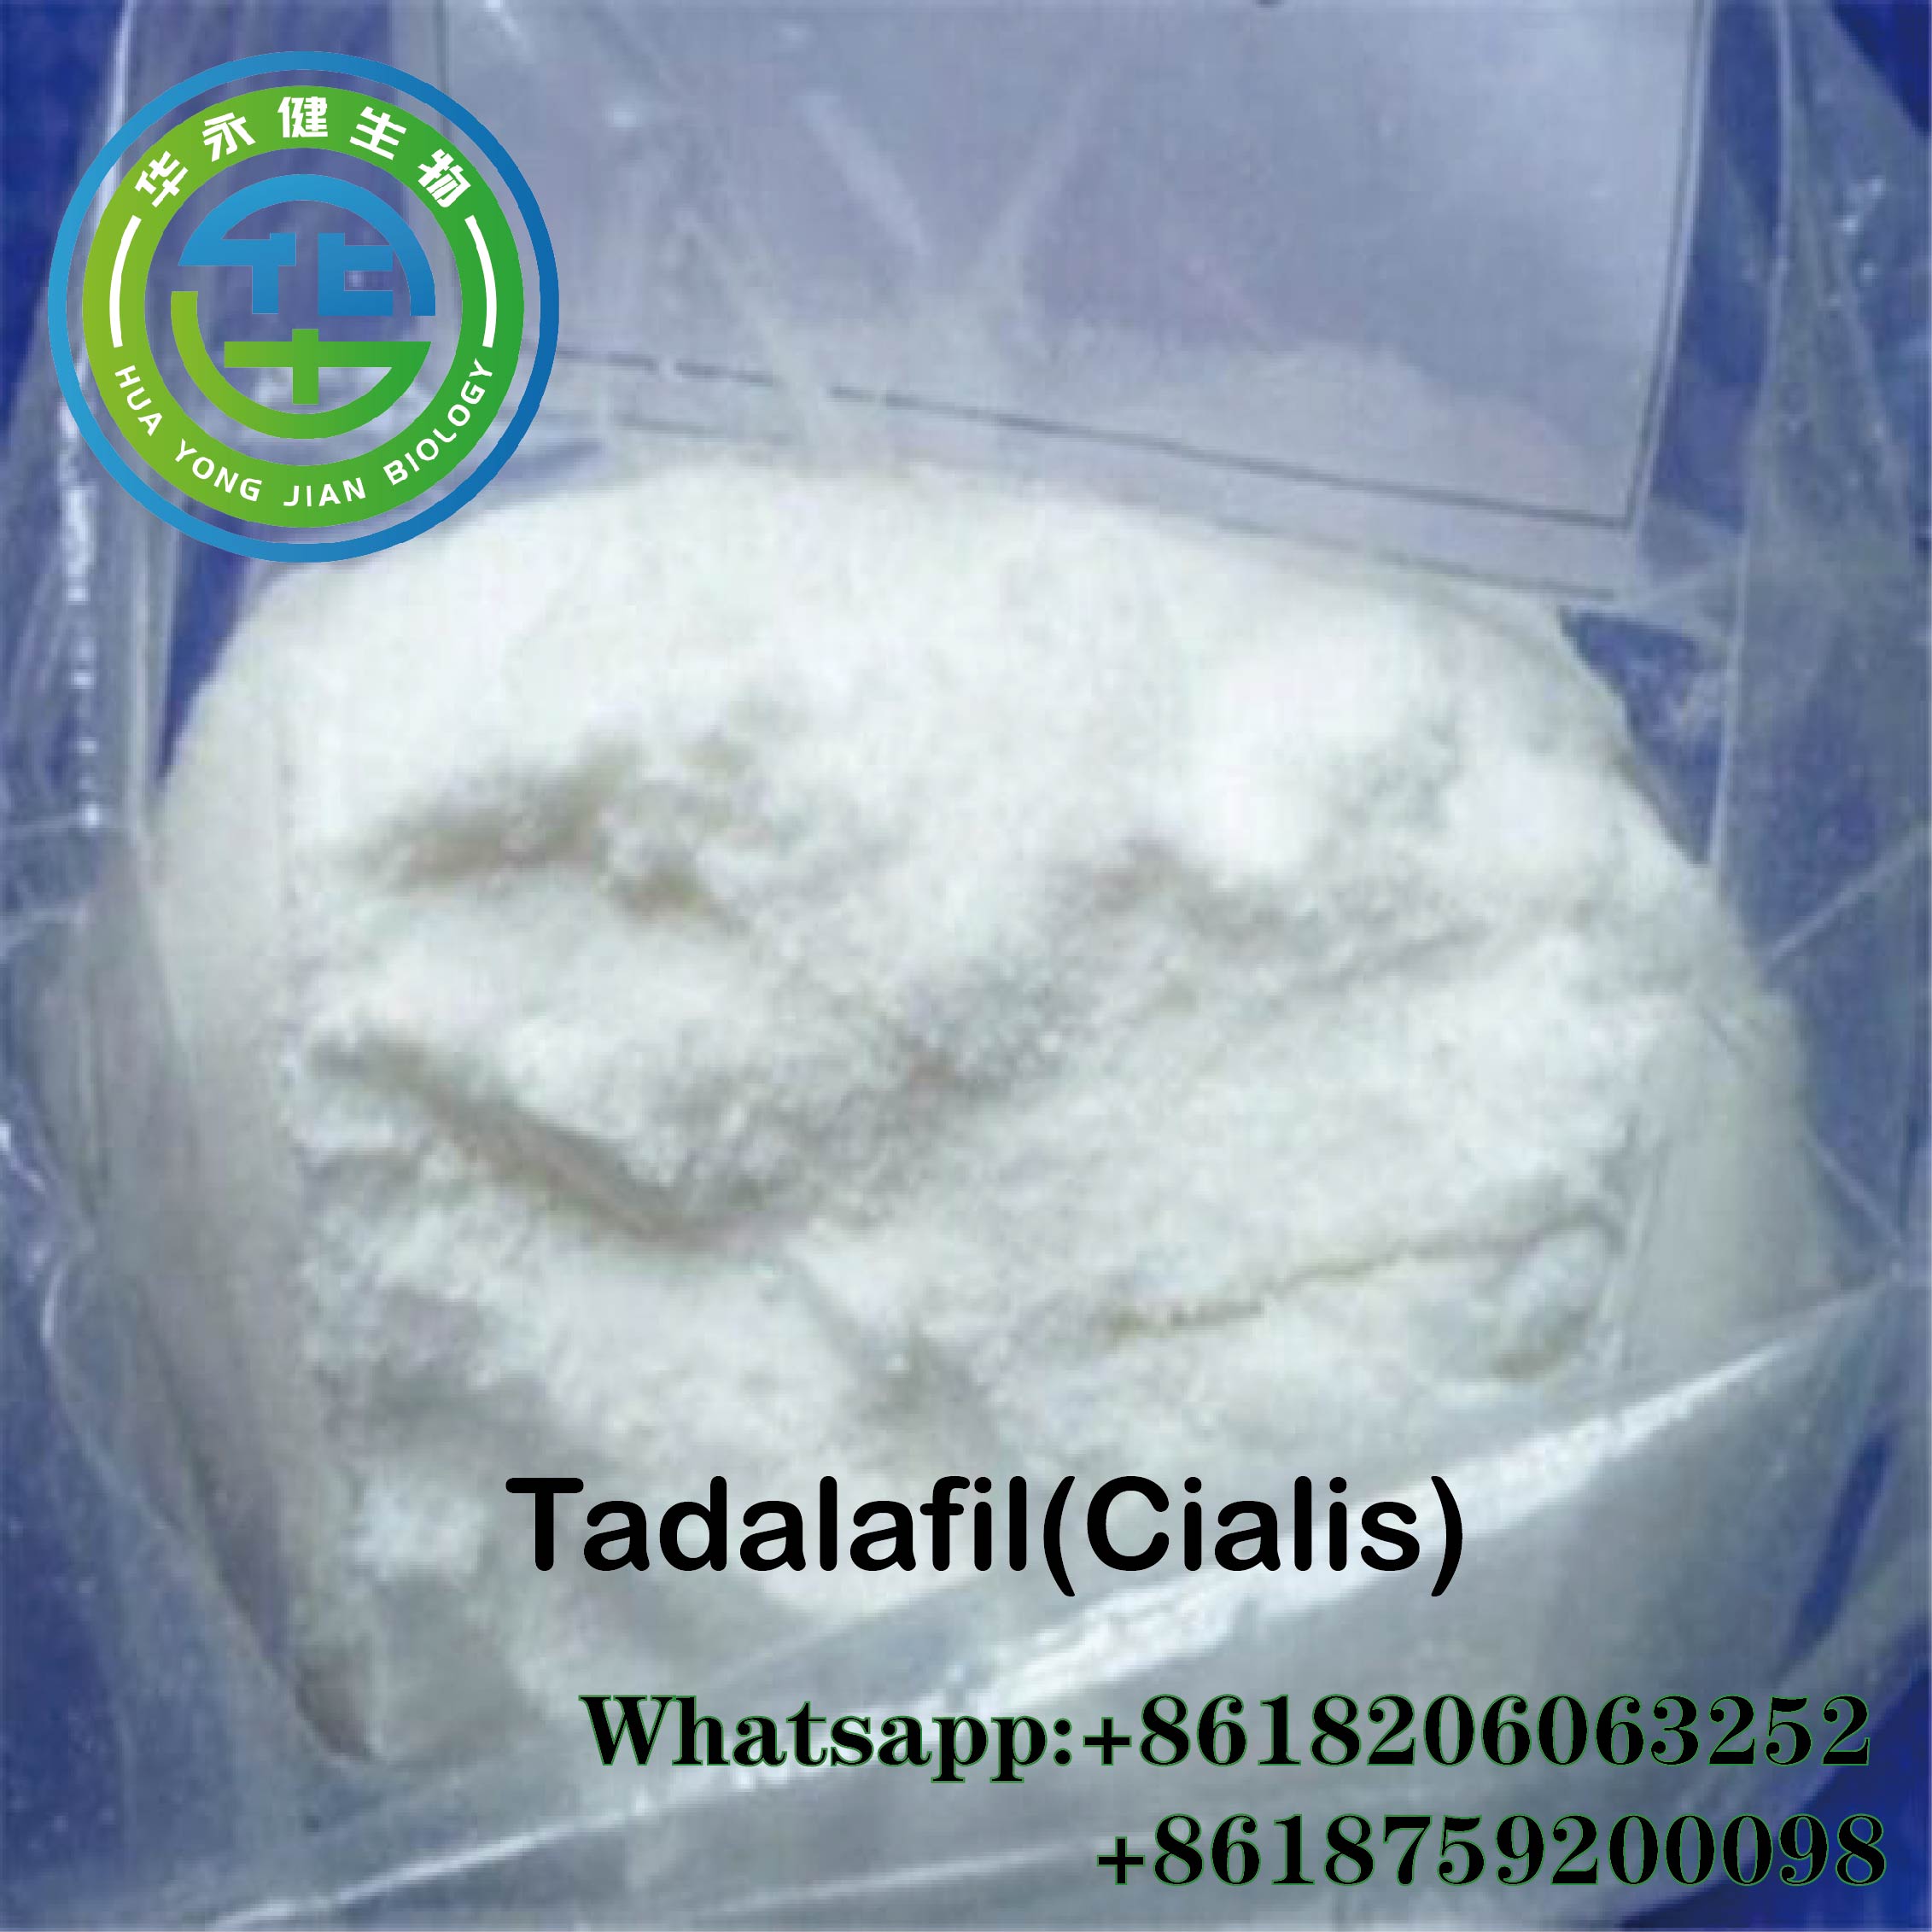 Pharmaceutical Grade Tadalafil (Cialis) Steroids Powder nga adunay 100% Delivery Gurantee CasNO.171596-29-5 Featured Image